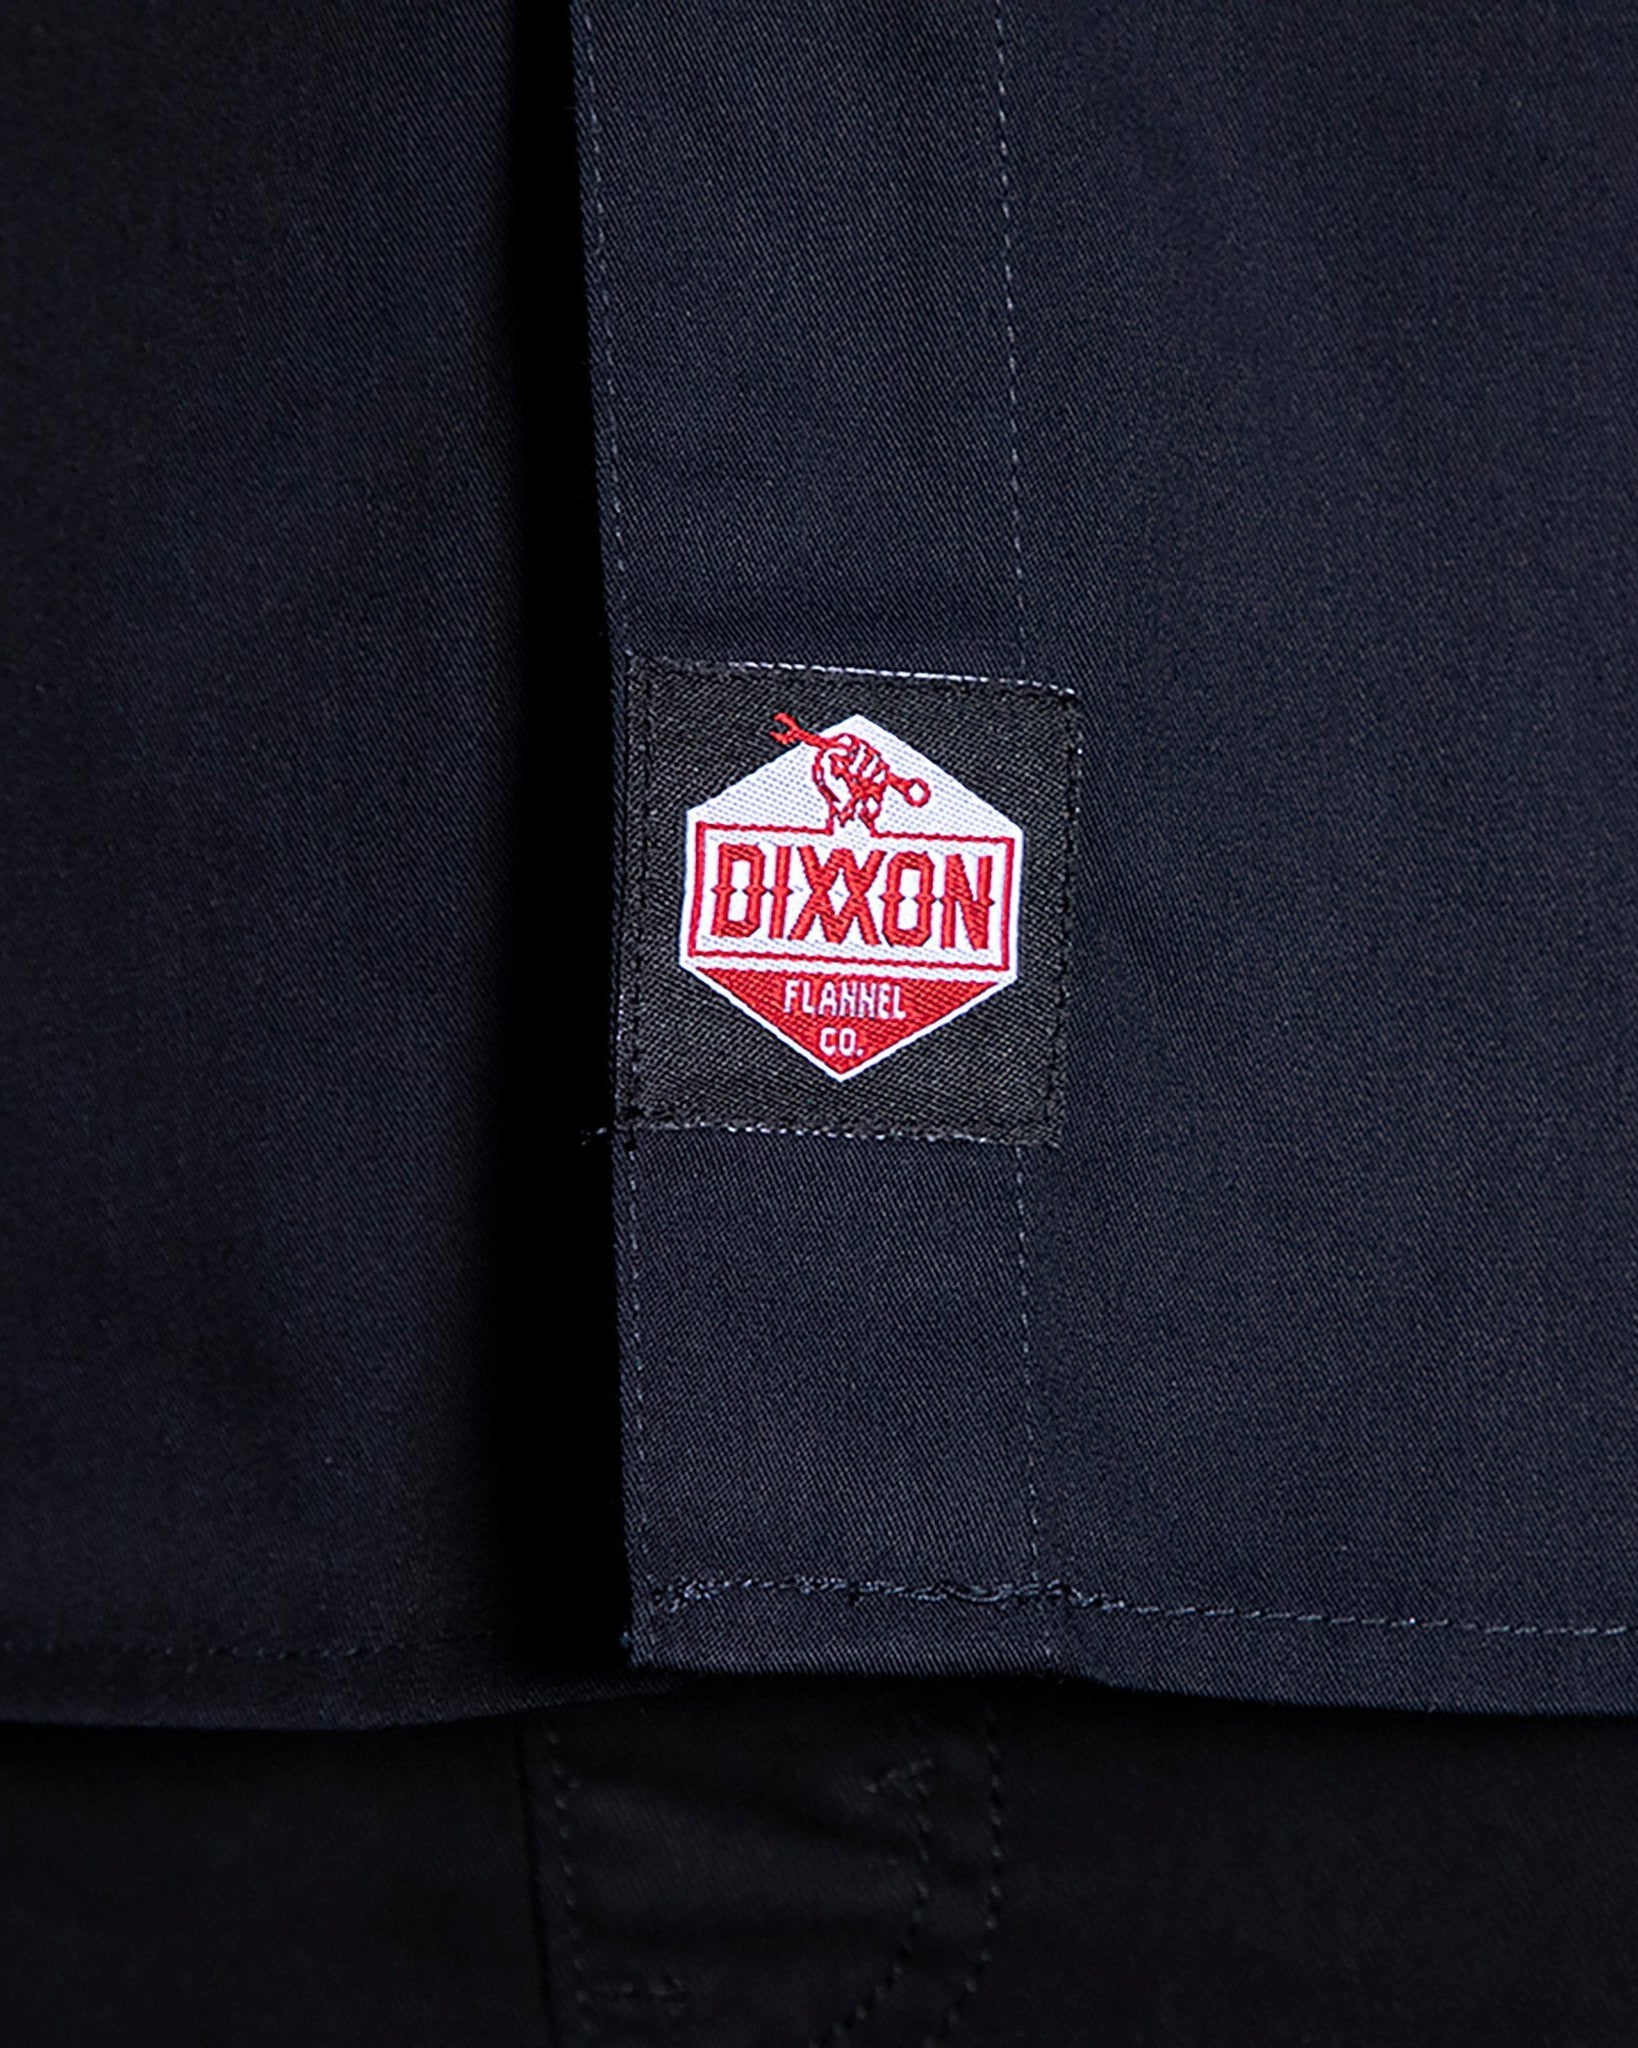 WorkForce Short Sleeve Work Shirt - Navy | Dixxon Flannel Co.